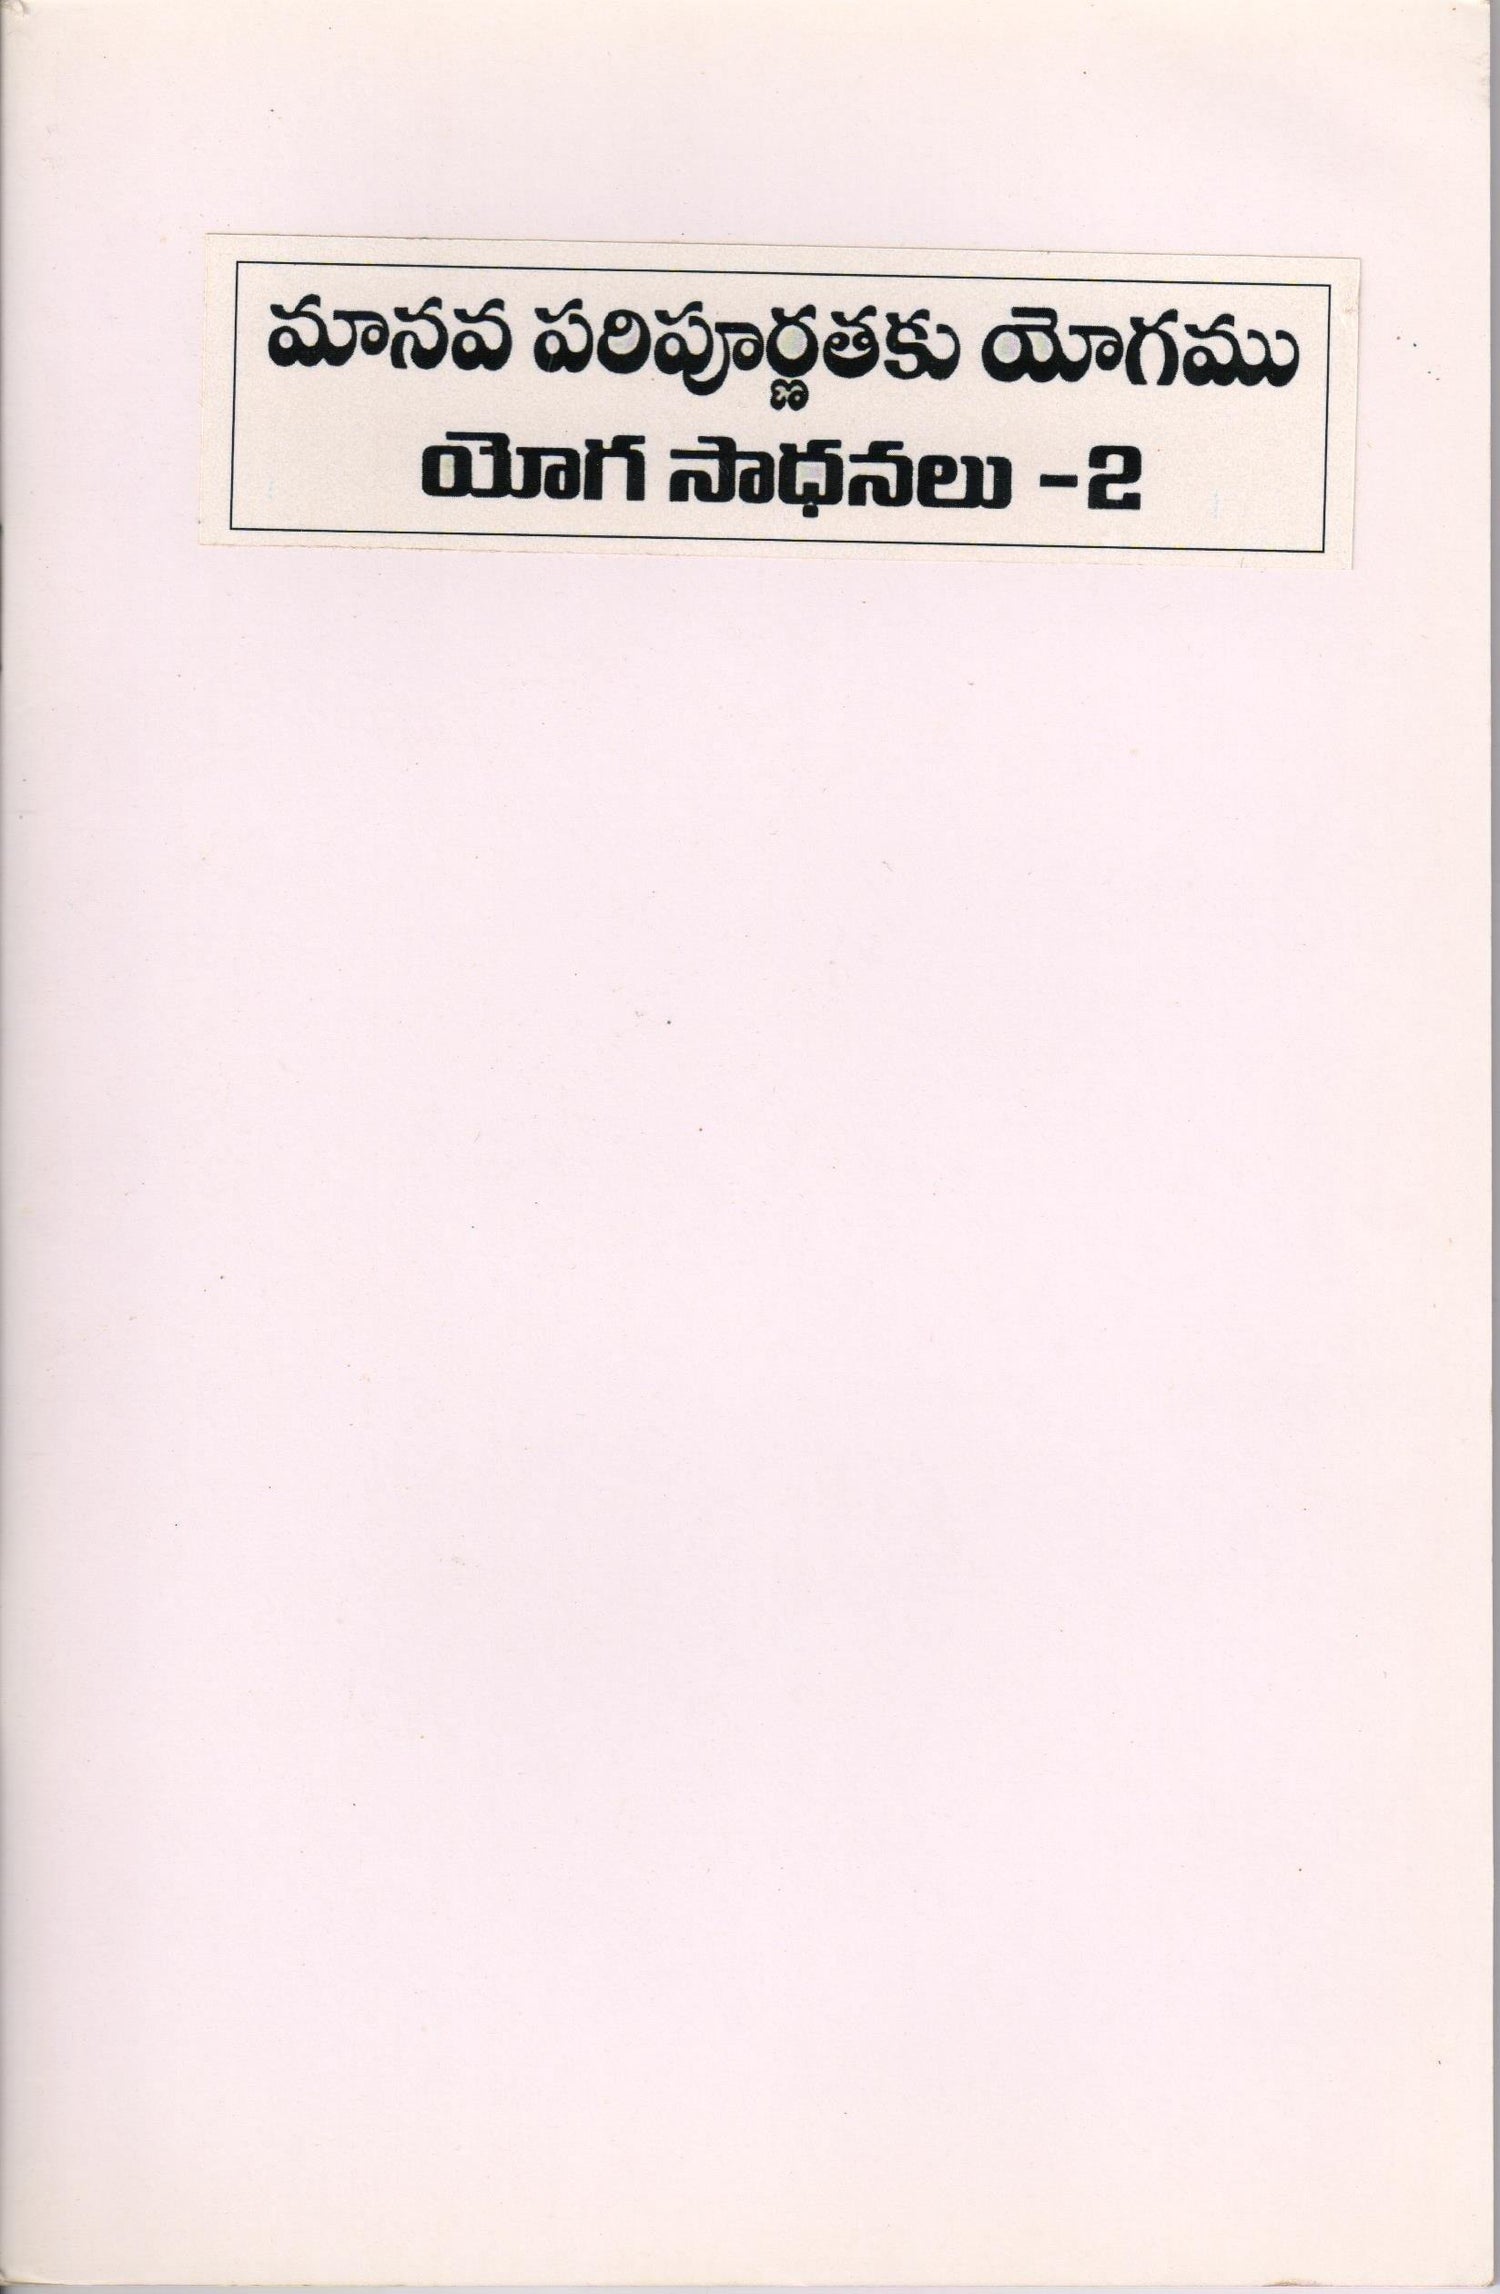 Yogapayirchigal - II Telugu - Vethathiri Maharishi Store